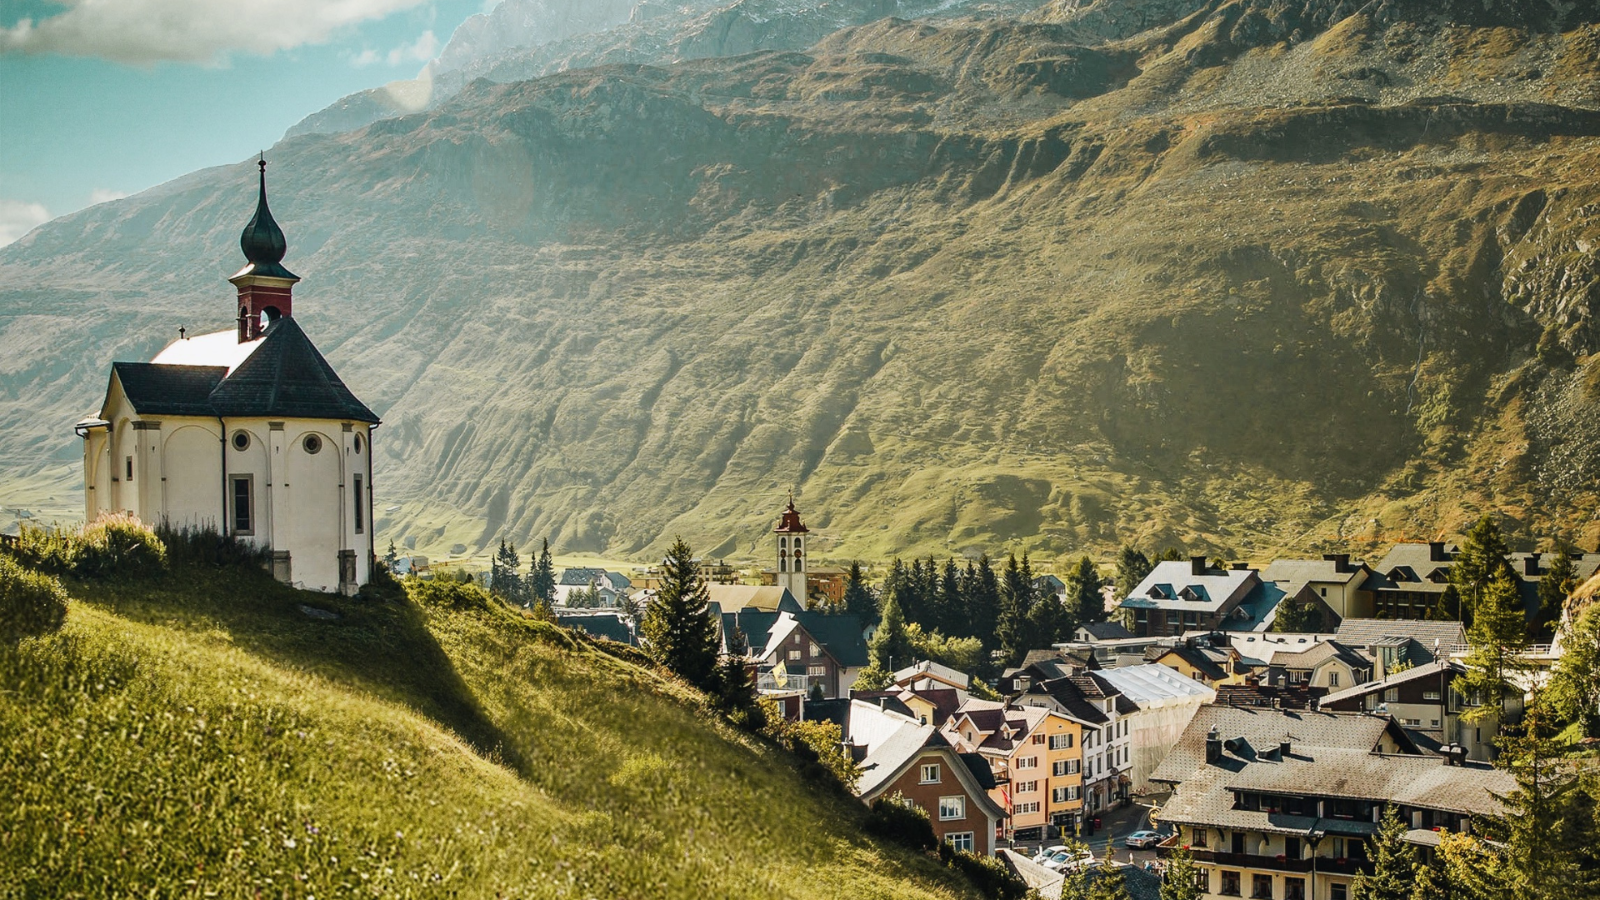 Luxury Resort Chedi Andermatt in Switzerland Aerial Town View in Summer